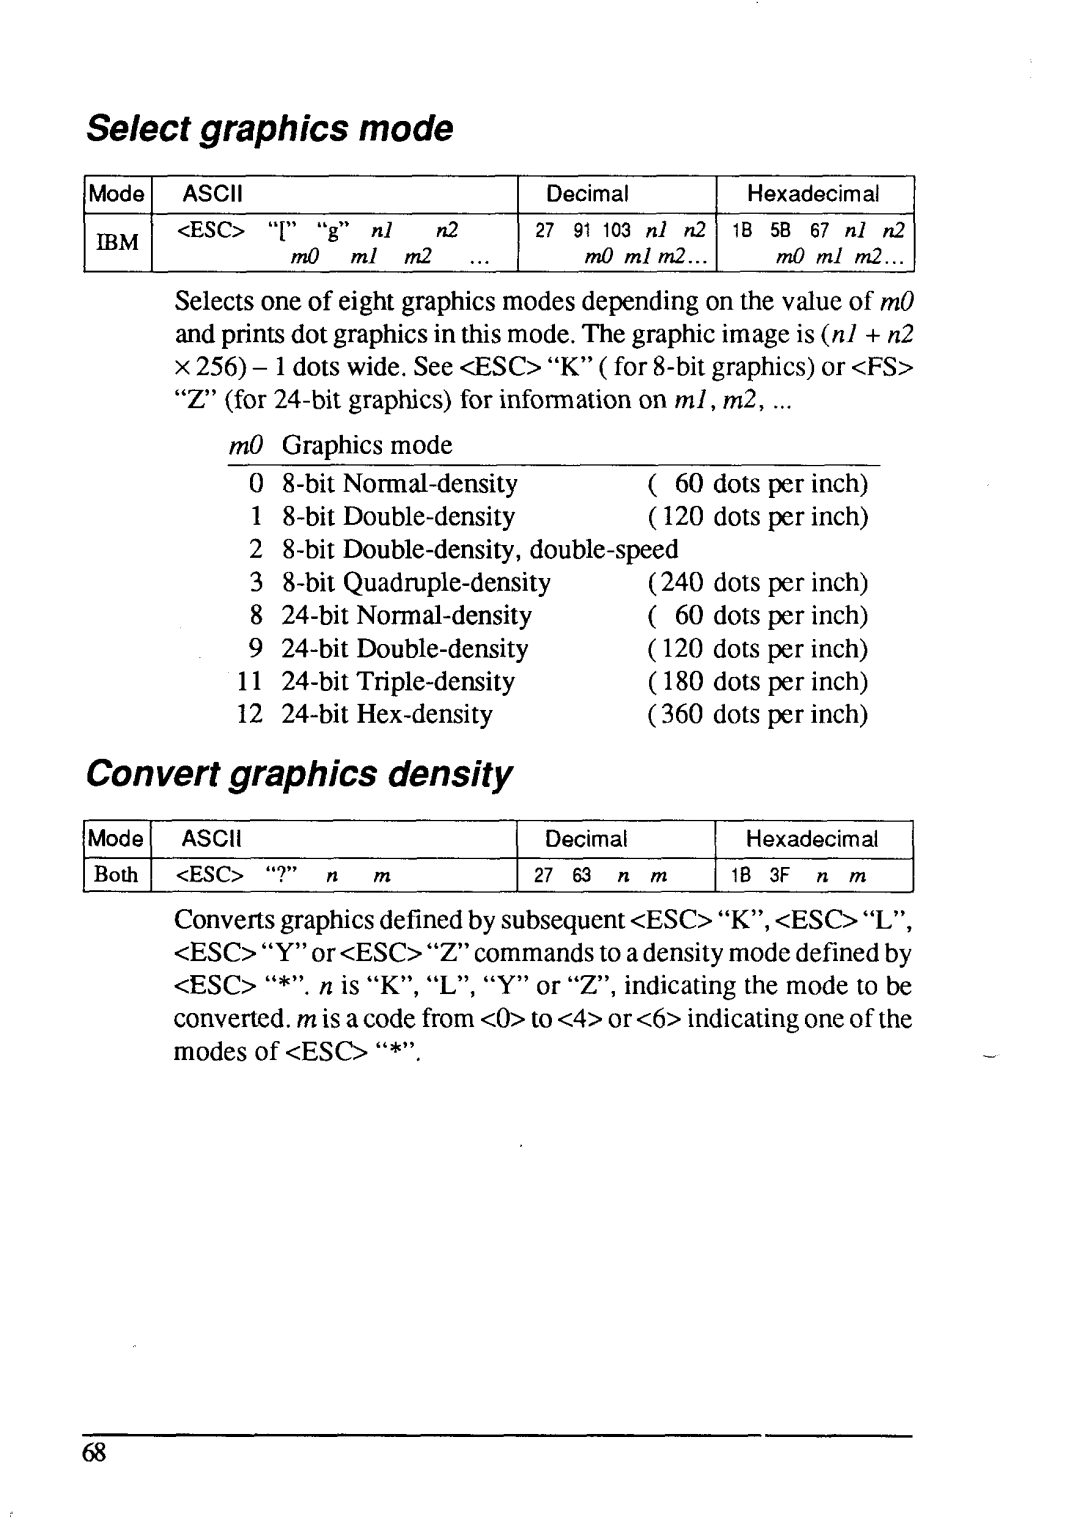 Star Micronics LC24-15 user manual Se/ect graphics mode, Convert graphics, density 